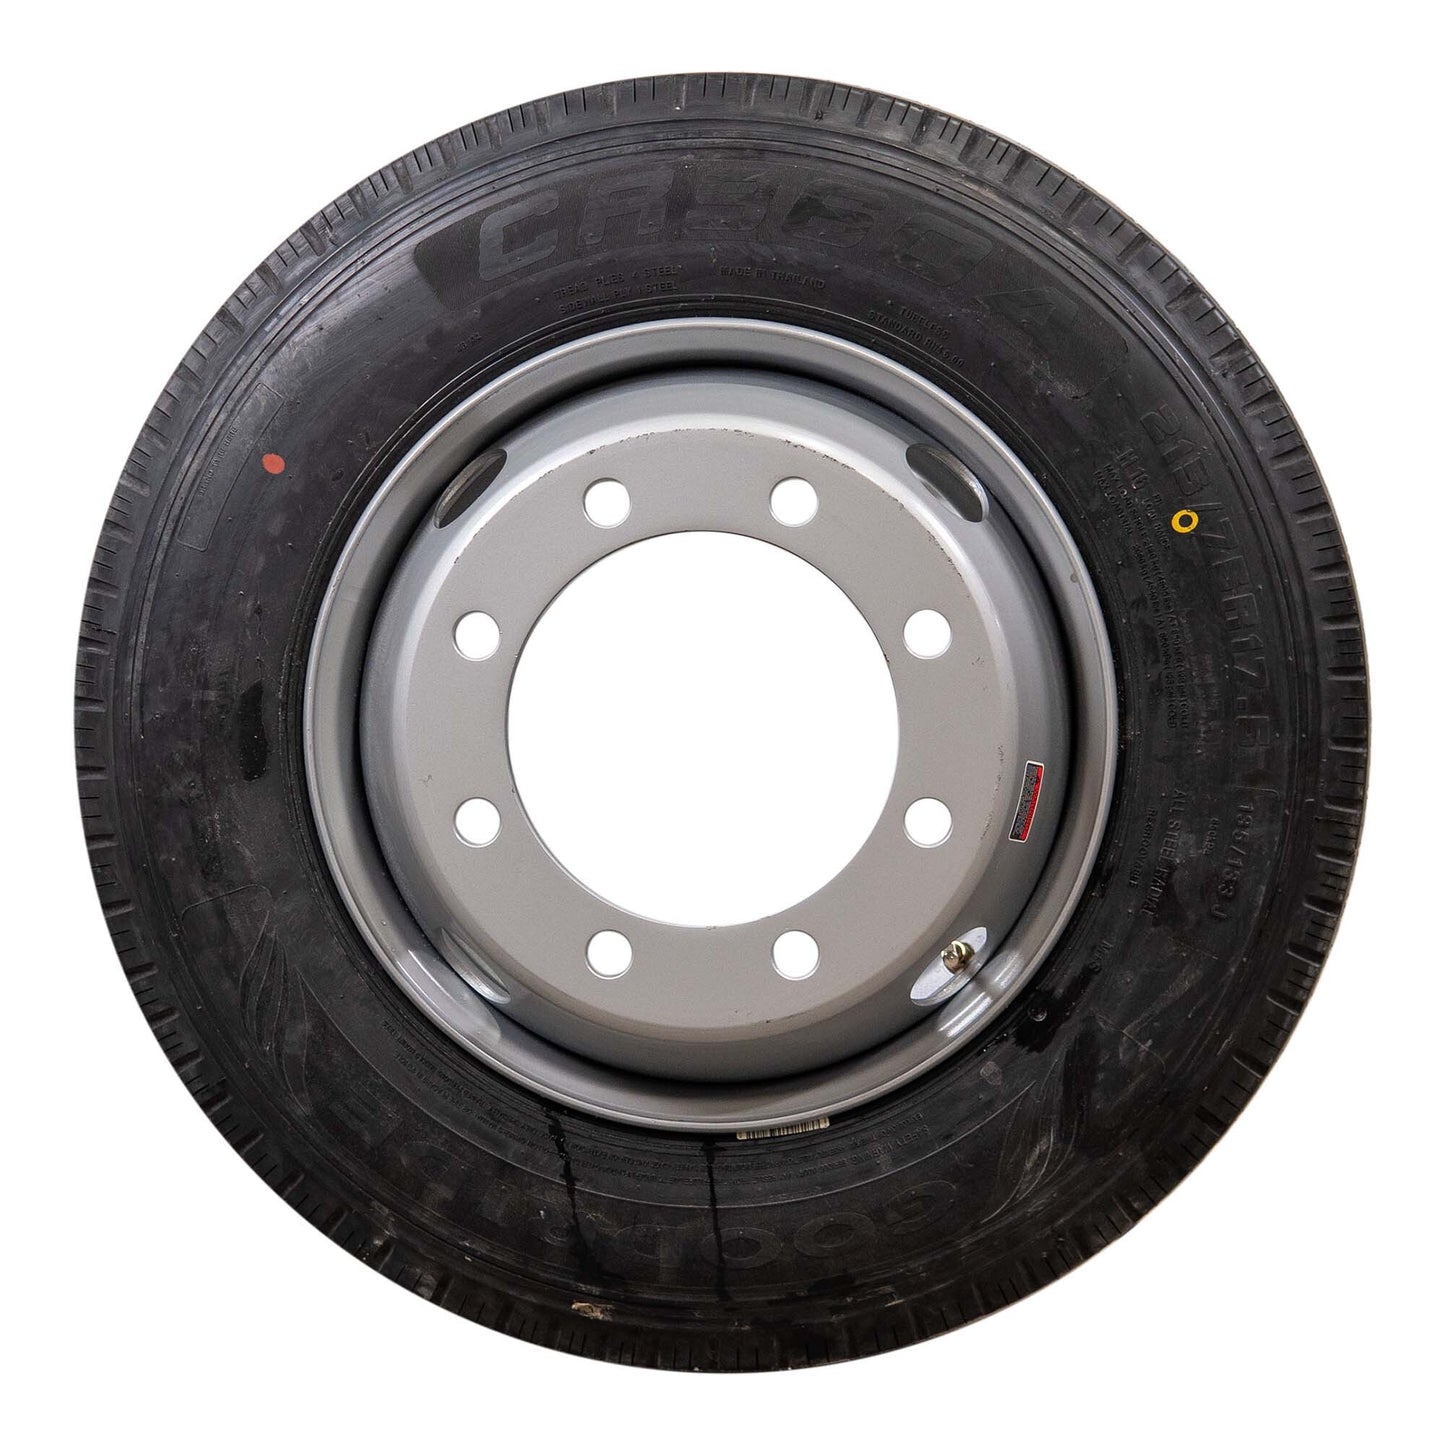 Goodride 17.5" 16 ply Radial Trailer Tire & Wheel - ST 215/75R17.5 8x275mm Lug (Silver Dual)